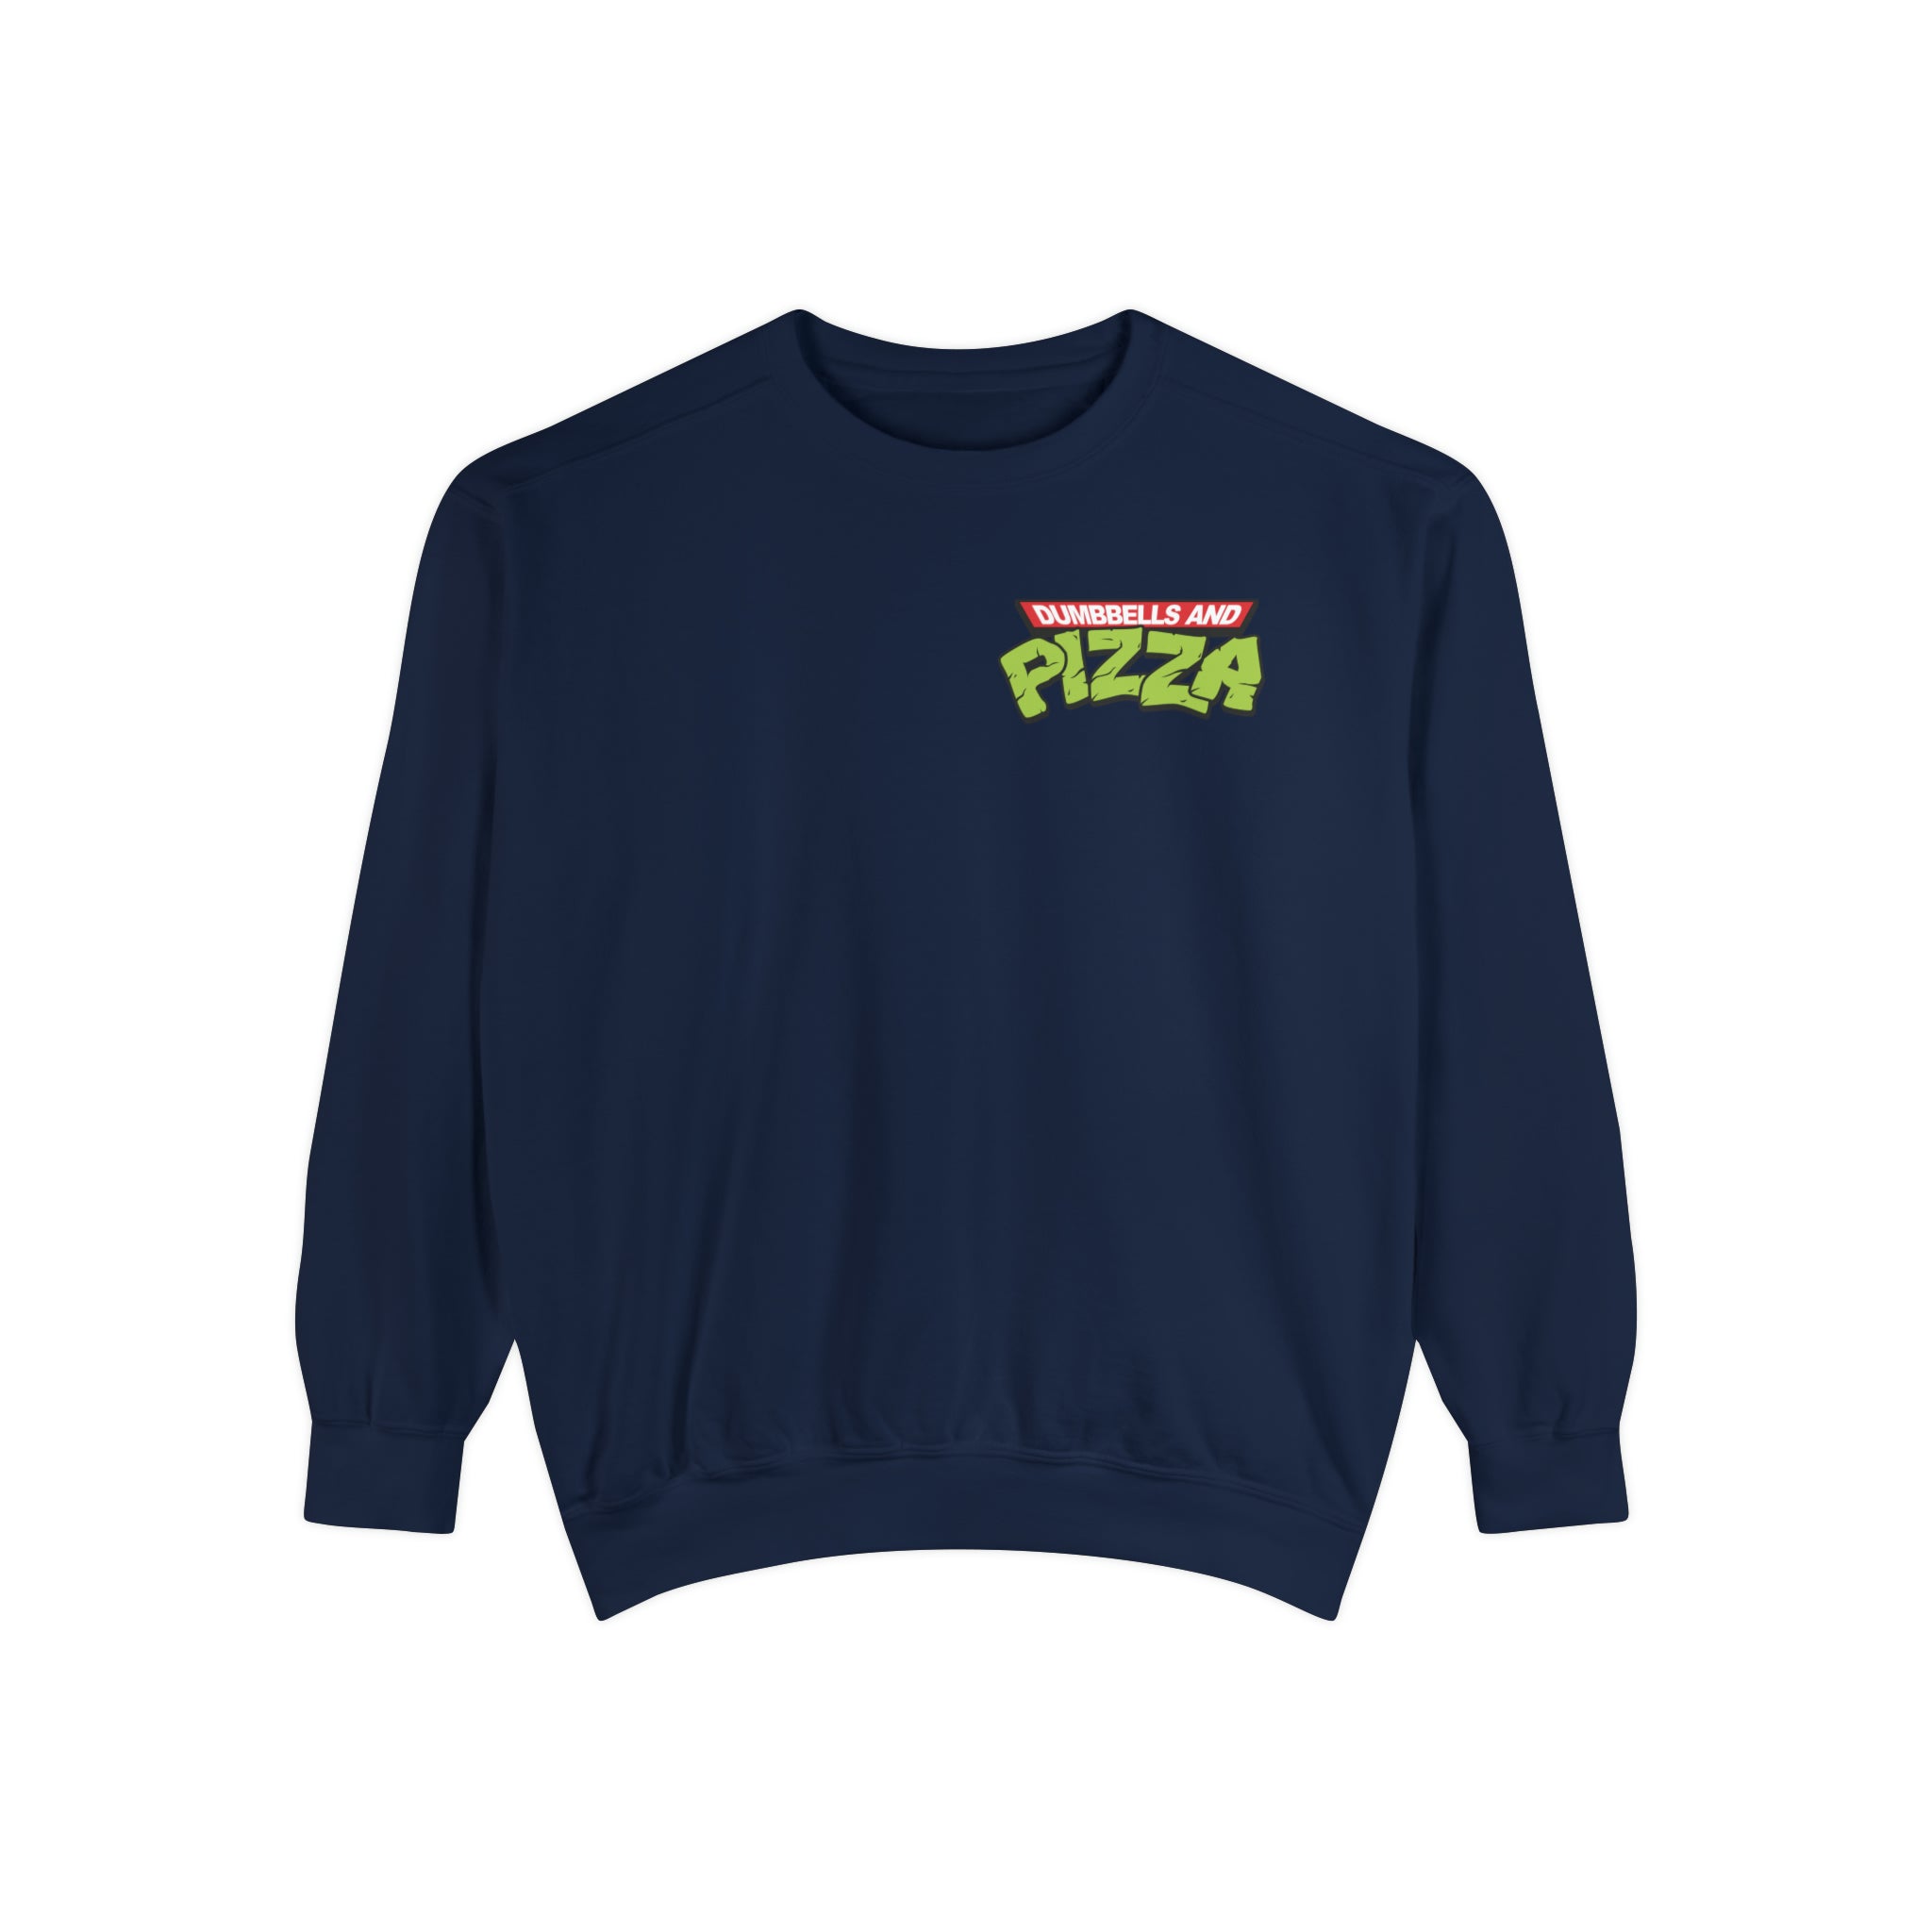 Dumbbells and Pizza Unisex Sweatshirt